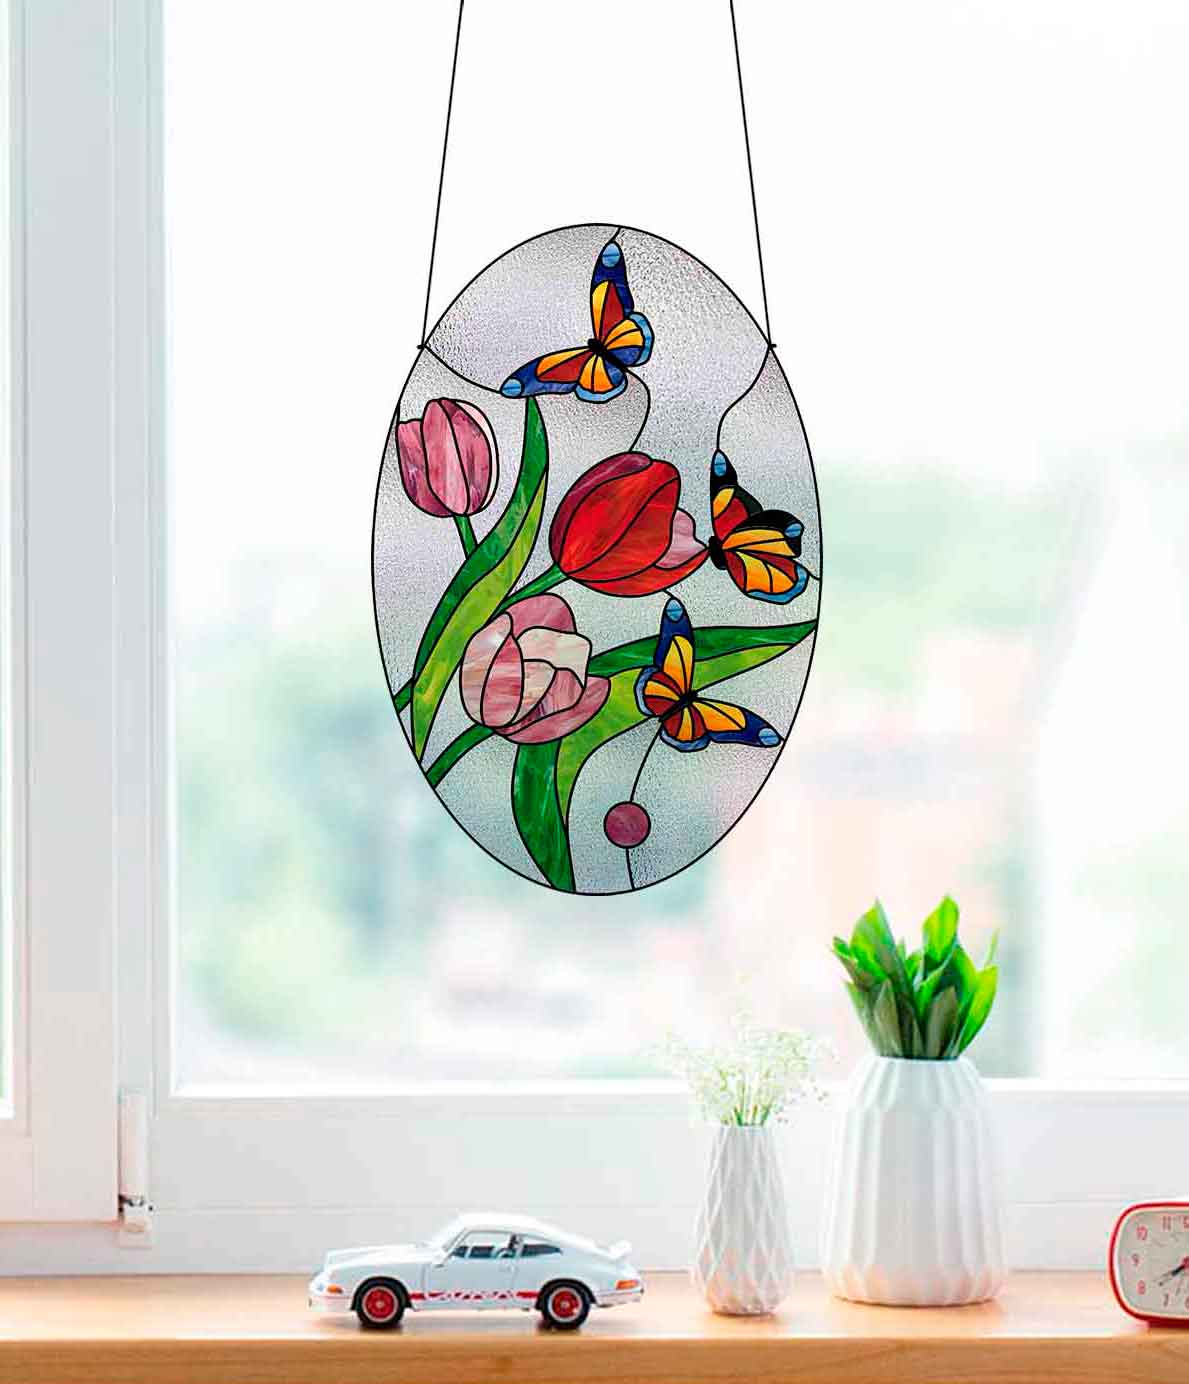 Beginner Stained Glass Patterns, Tulips - Crealandia